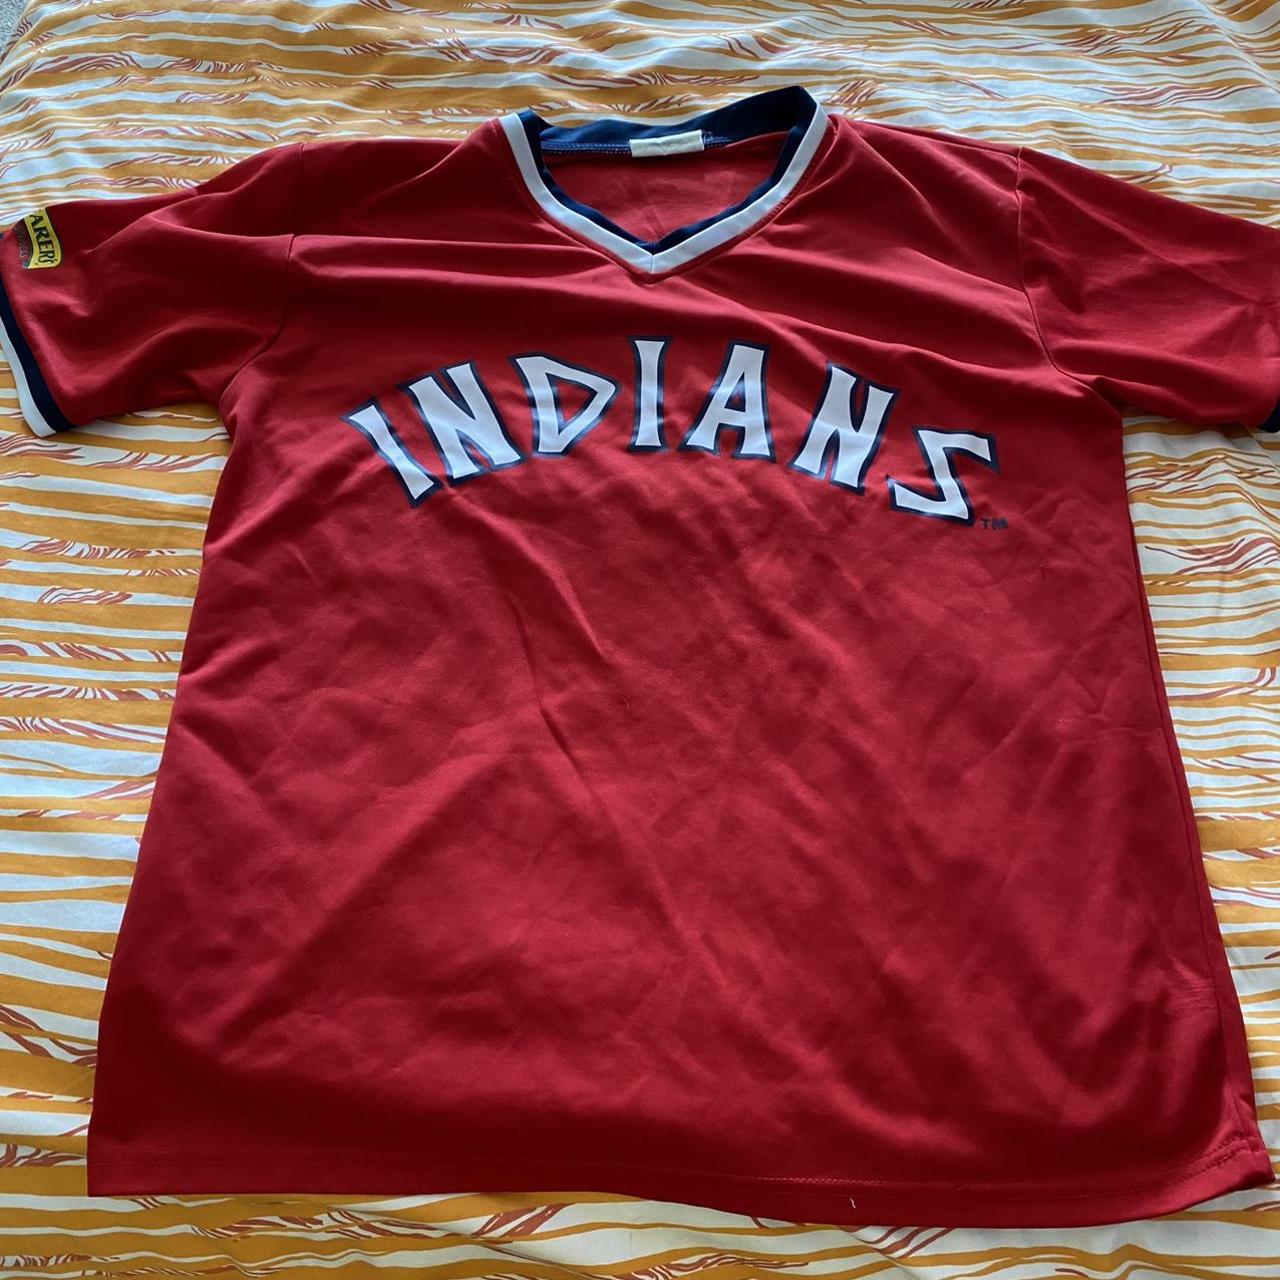 retro indians shirt